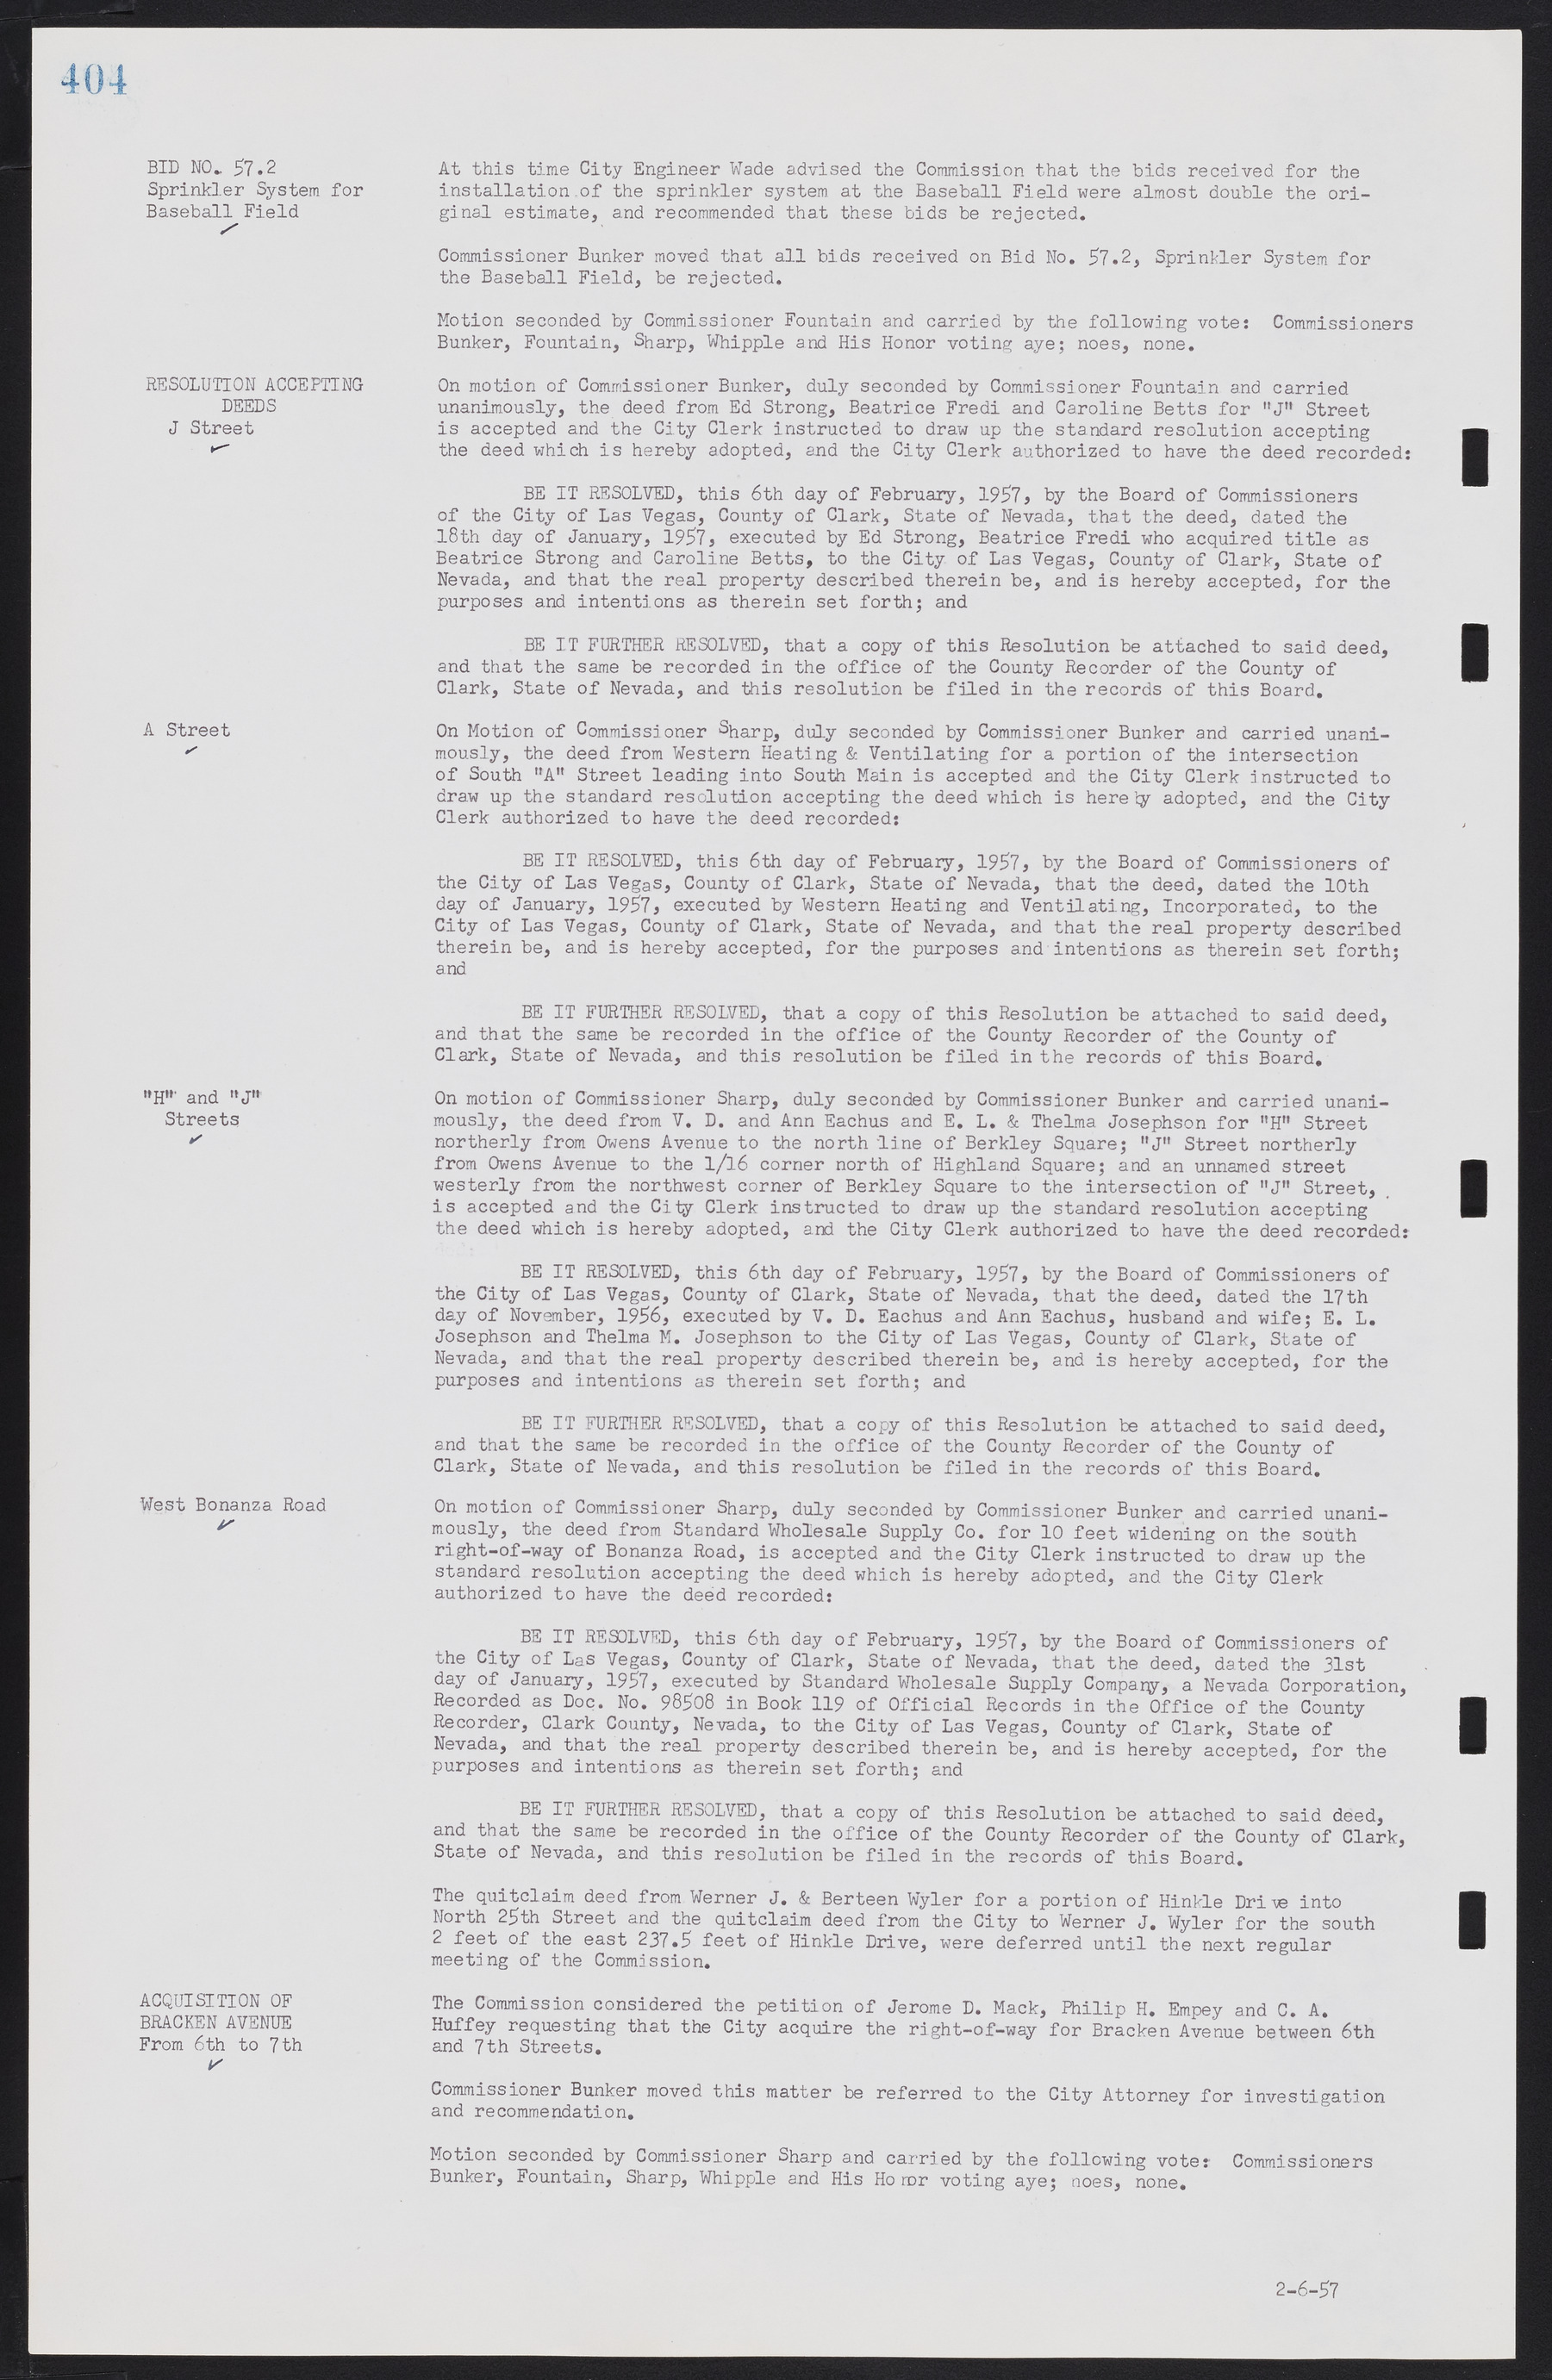 Las Vegas City Commission Minutes, September 21, 1955 to November 20, 1957, lvc000010-424